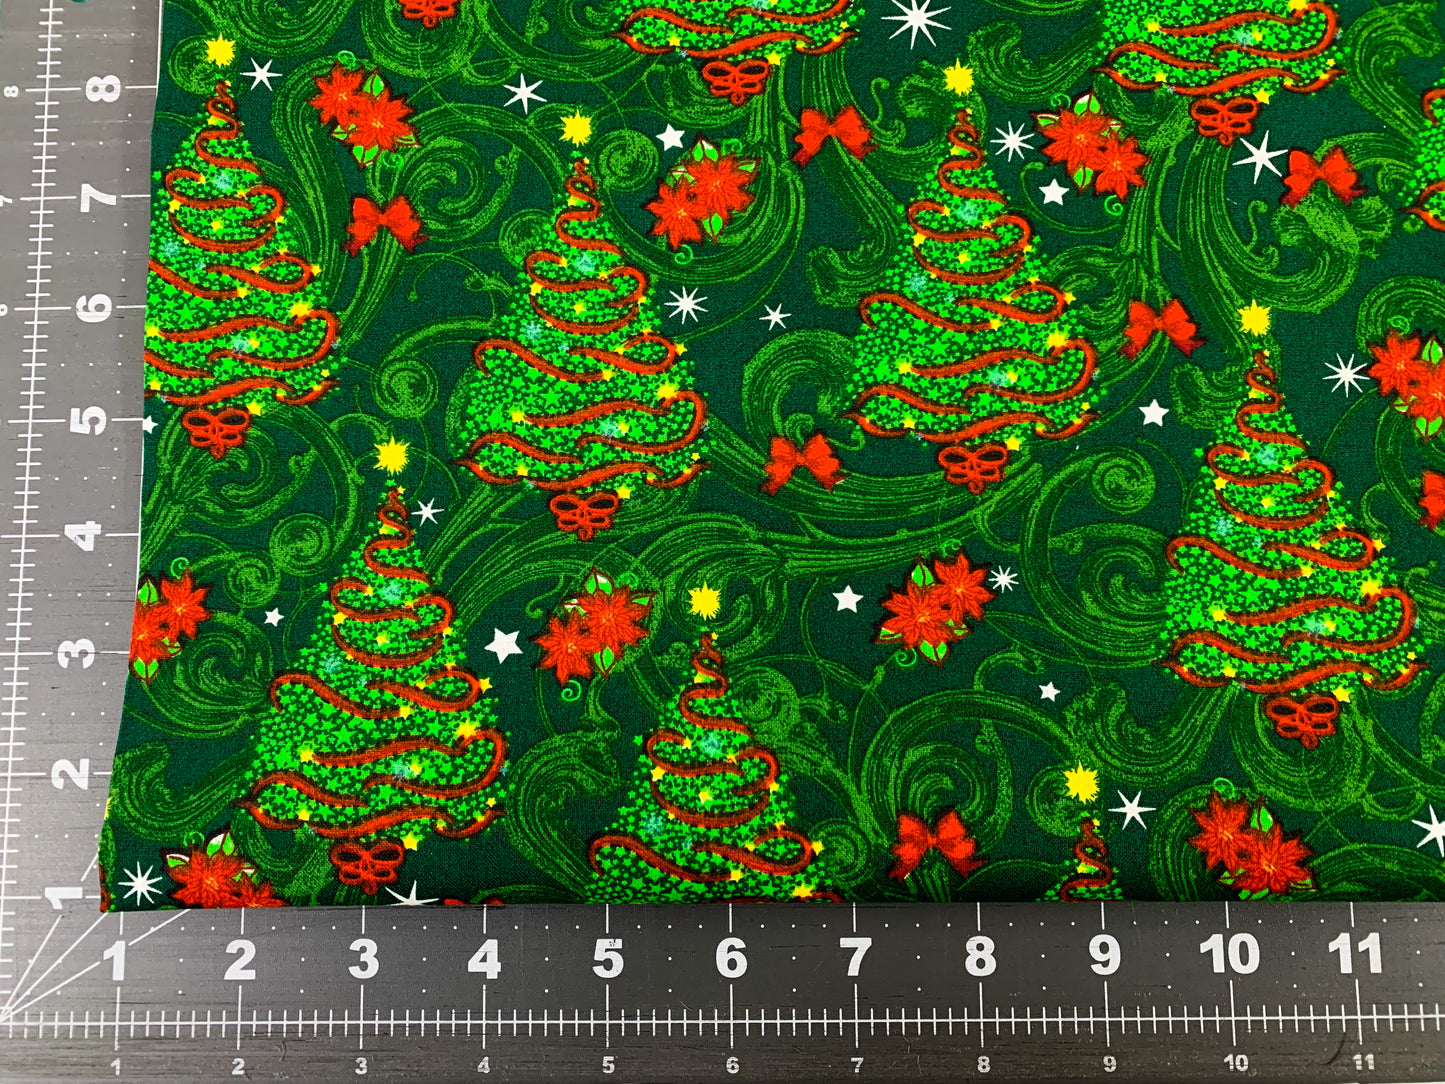 Green Christmas Tree fabric Christmas quilting fabric